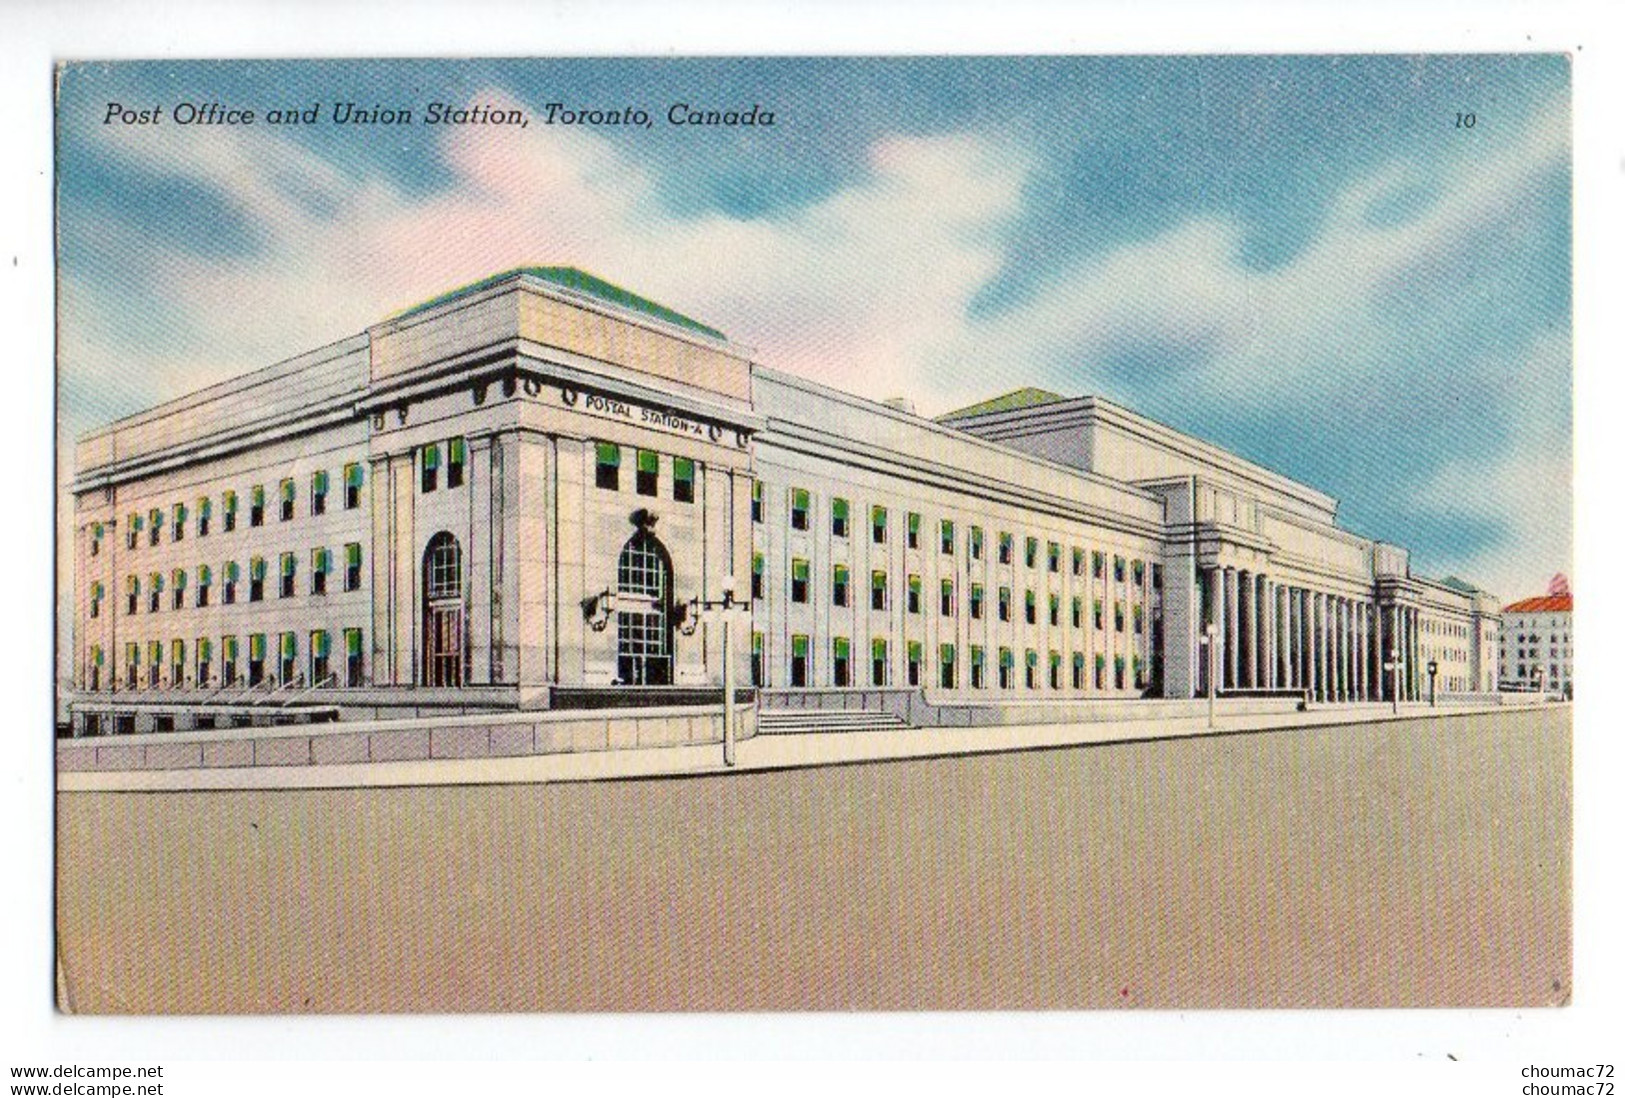 013, Canada Ontario, Toronto, Colourpicture 10, Post Office Station - Toronto